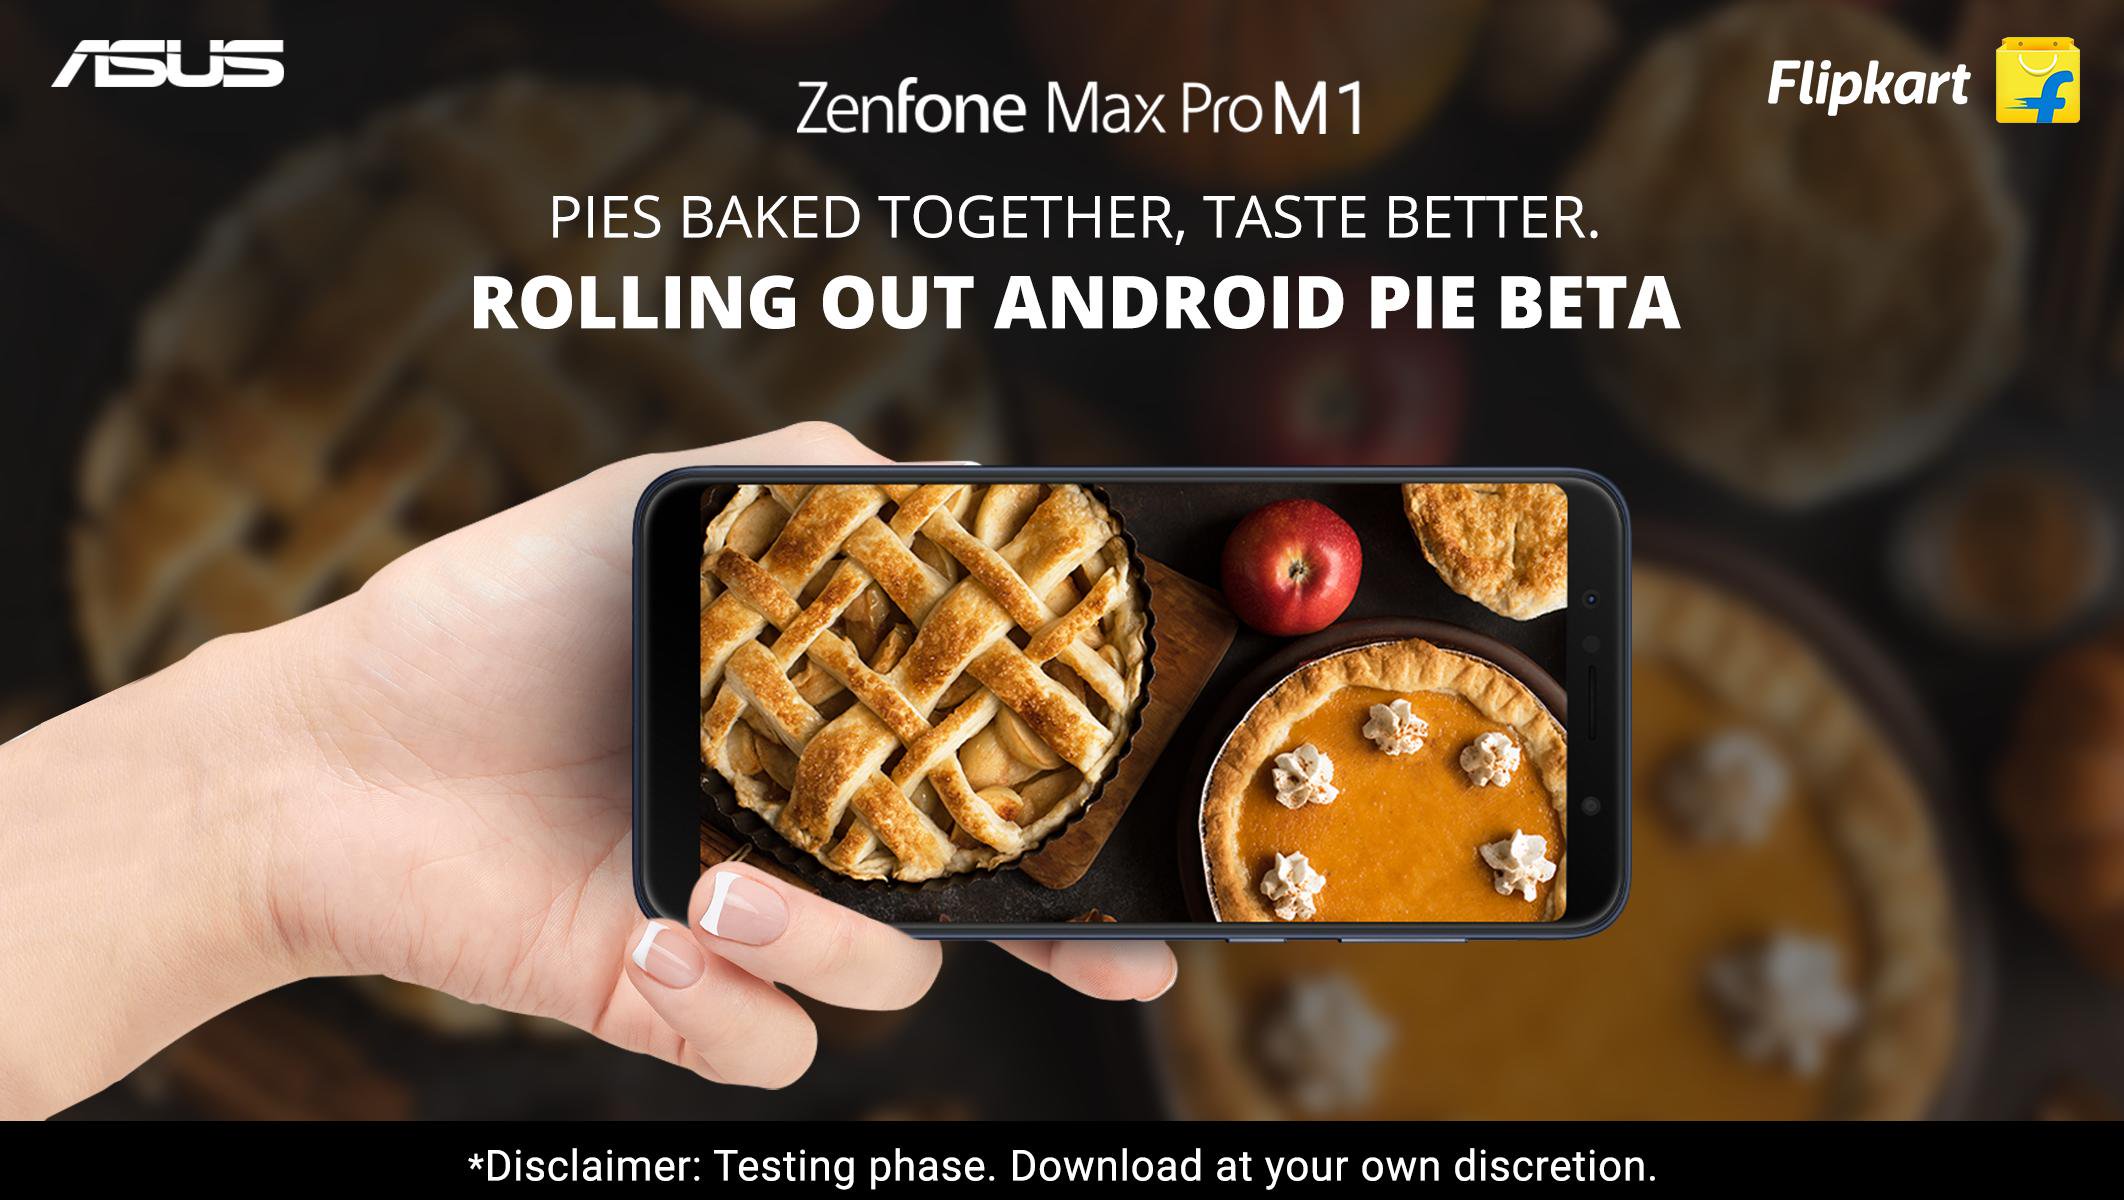 Asus Zenfone Max Pro M1 gets Android Pie via Beta Power User Program in India